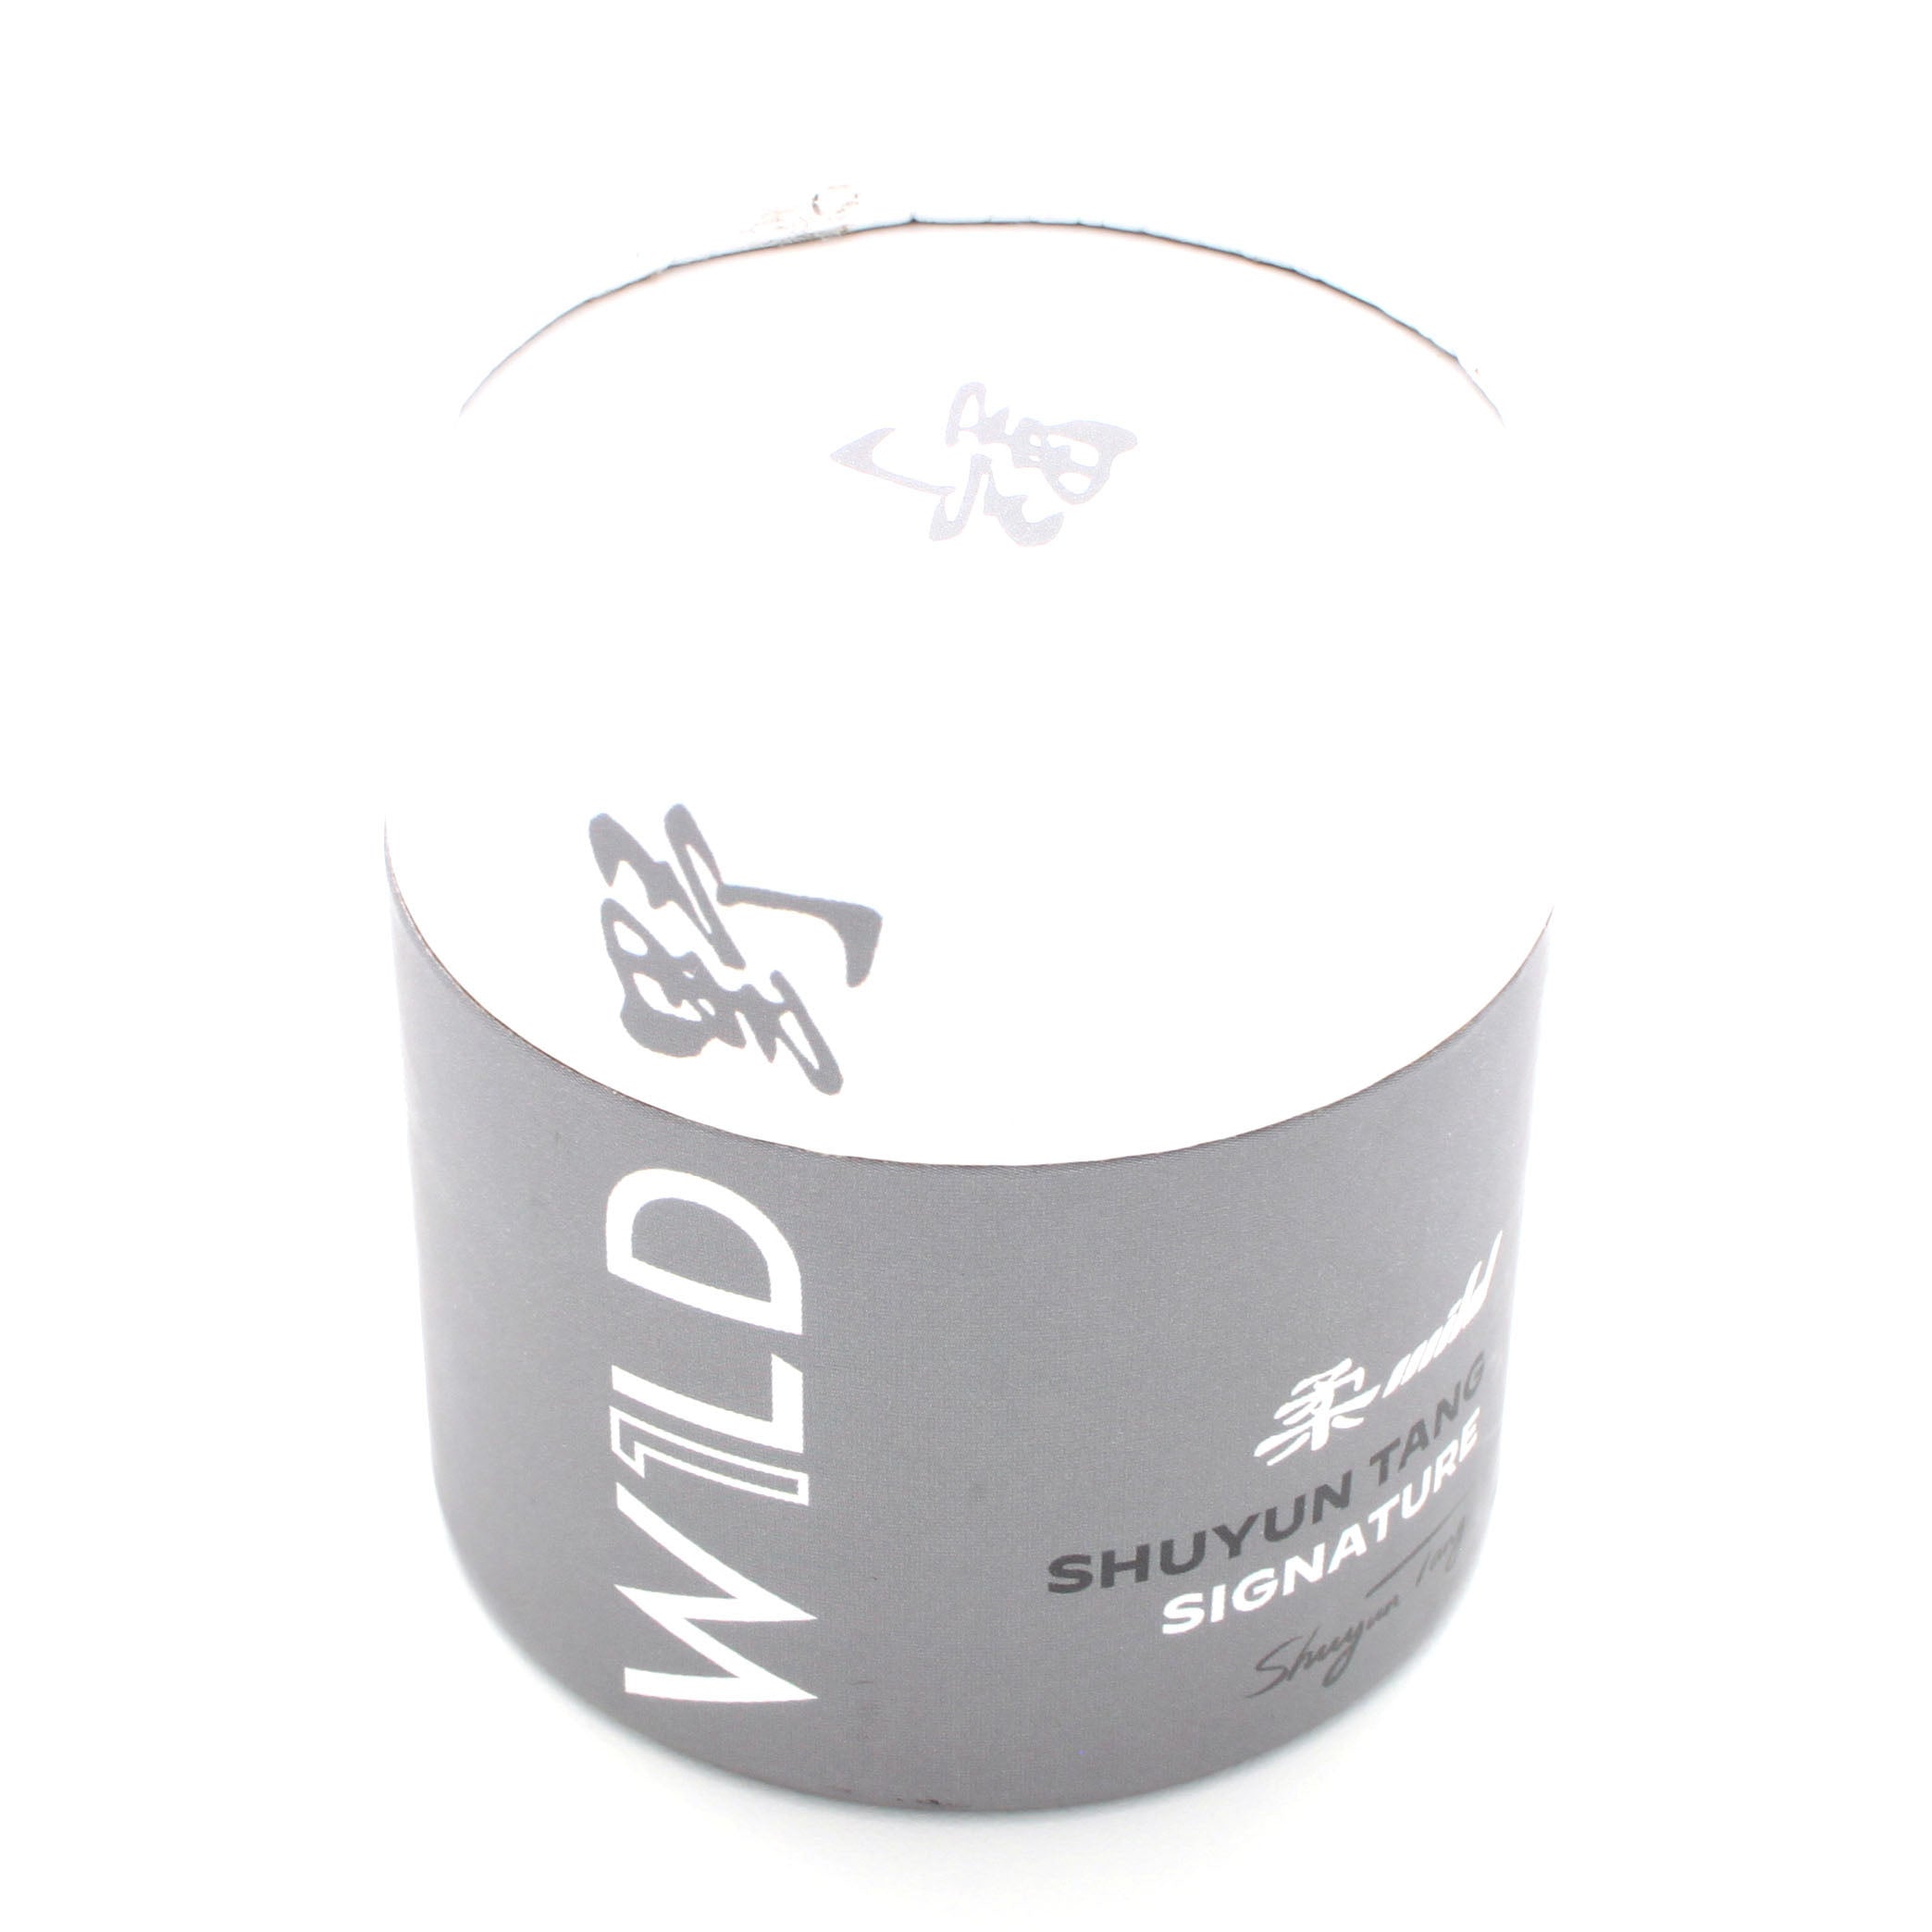 Mild (With Shuyun Tang Photo Card) - W1LD / YO-YO STORE REWIND 